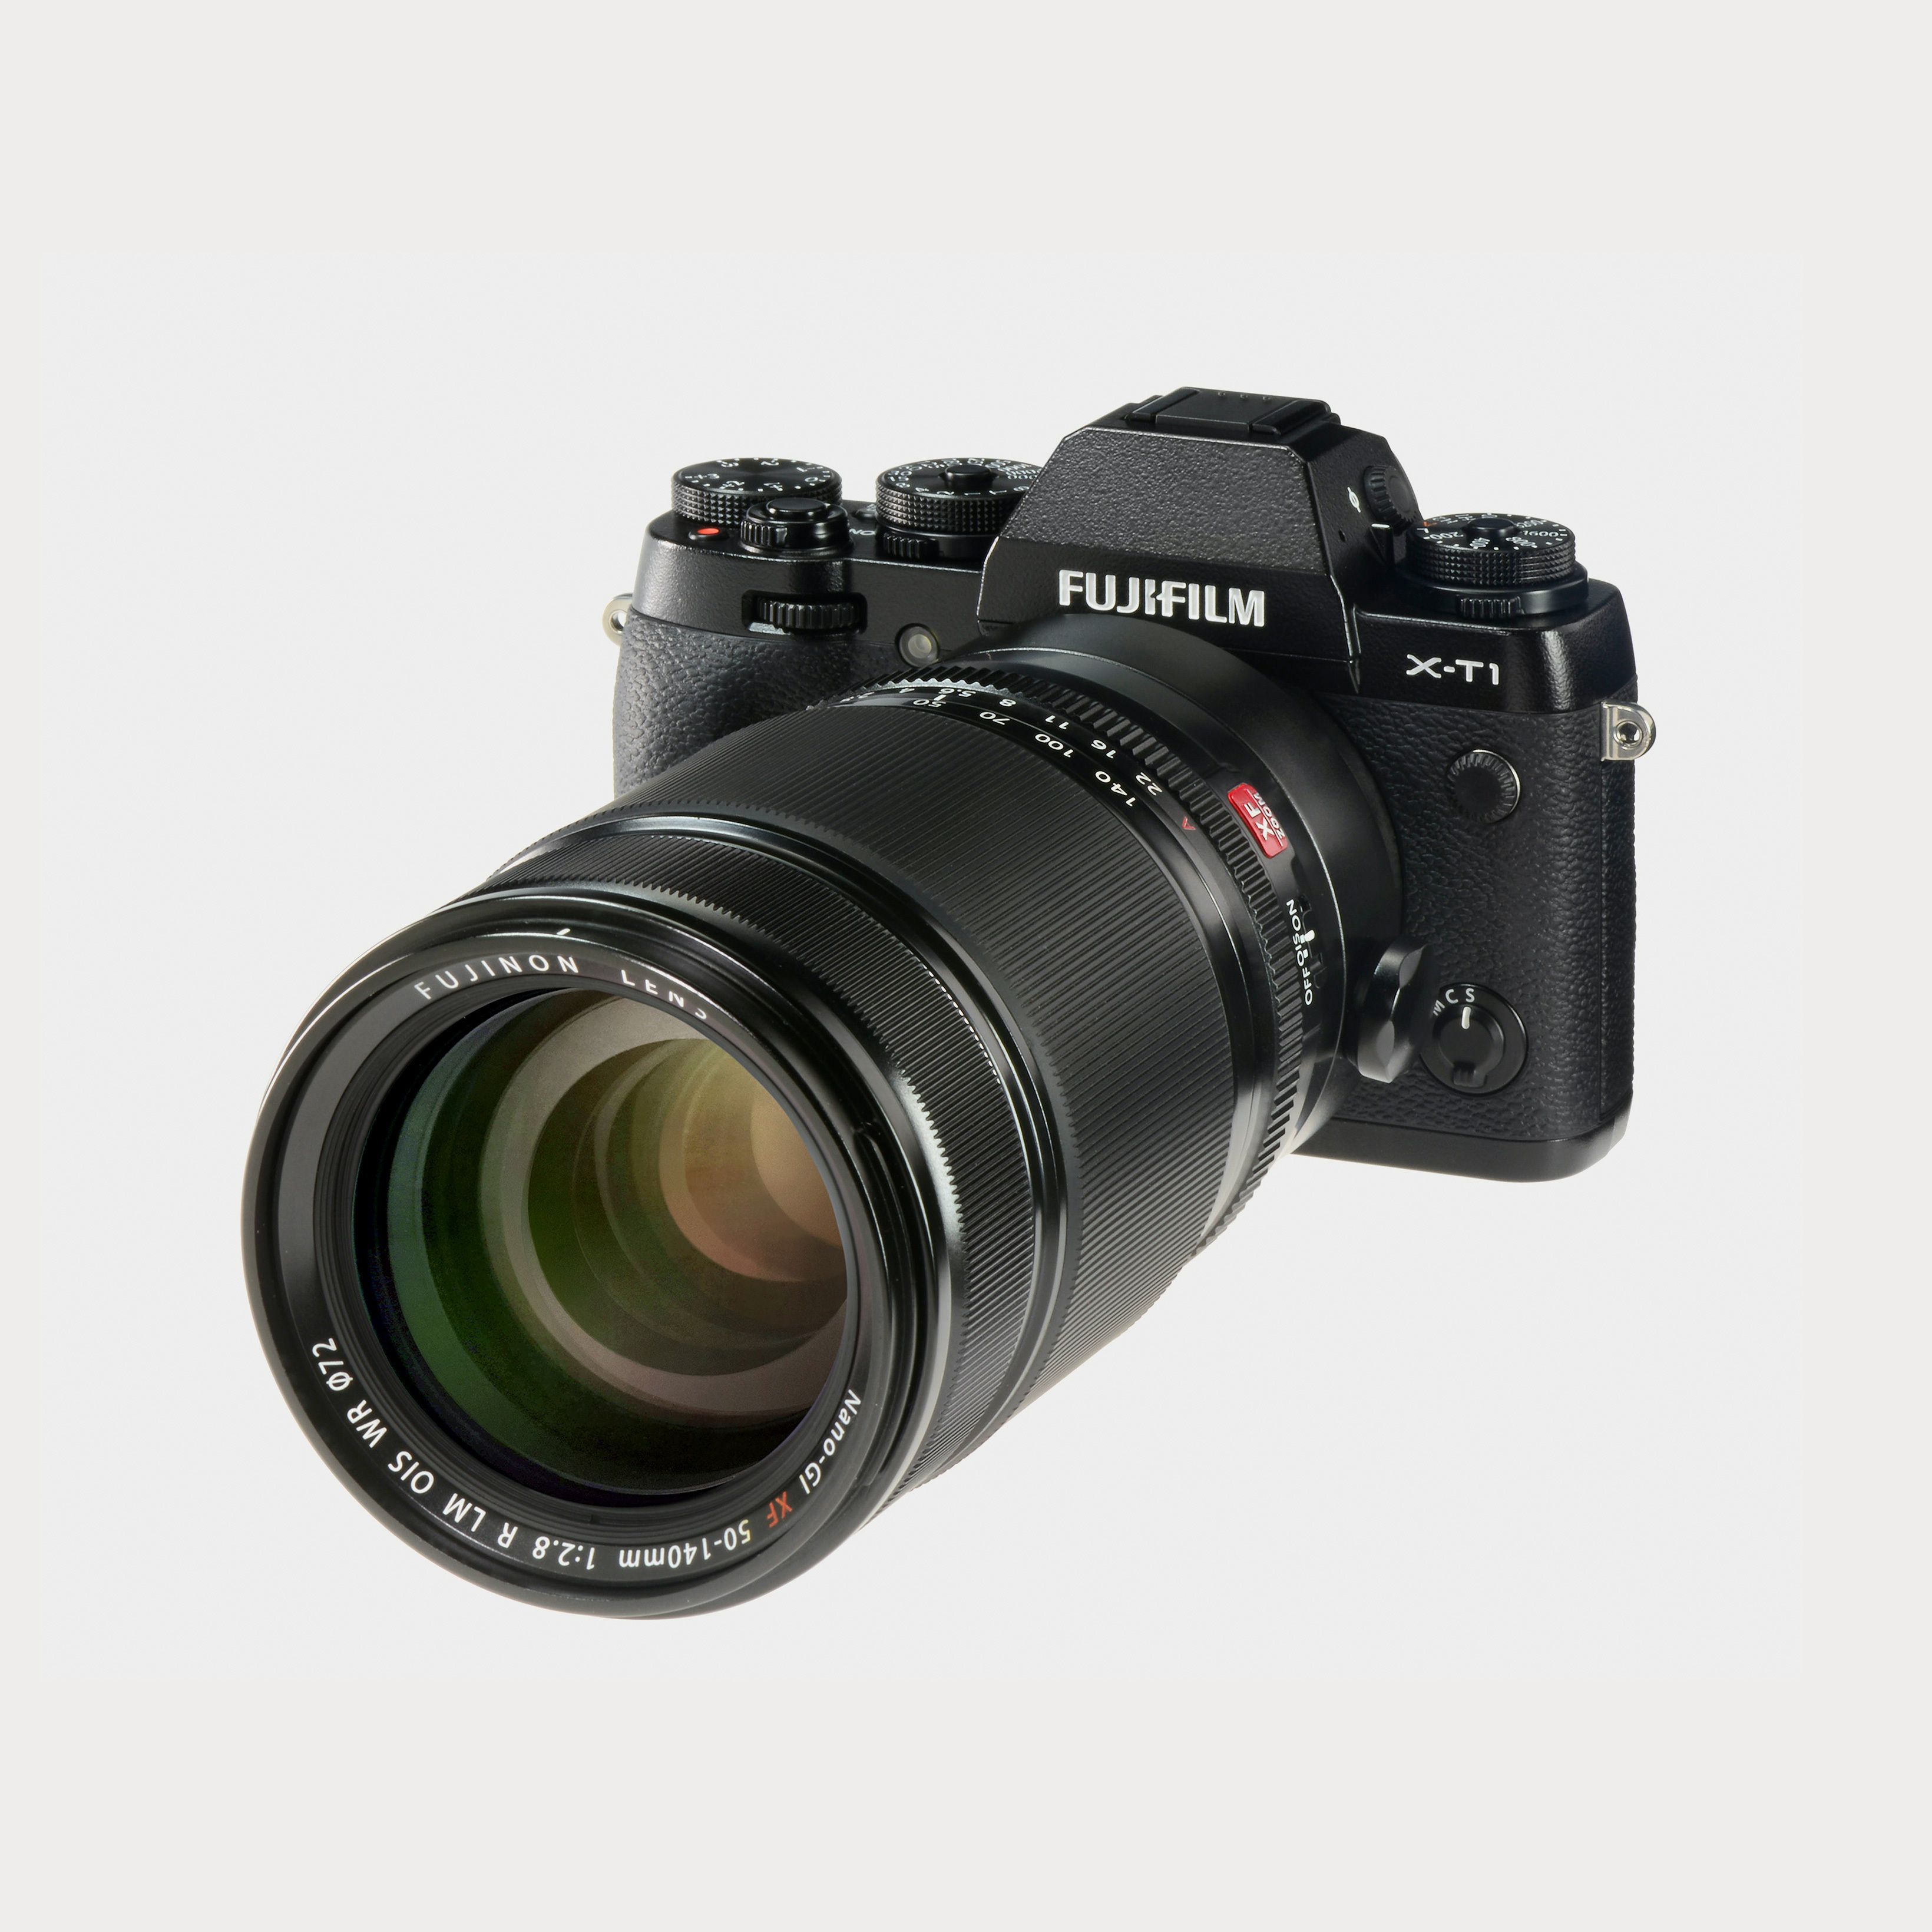 Fujifilm XF 50-140mm F2.8 R LM OIS WR Lens | Moment